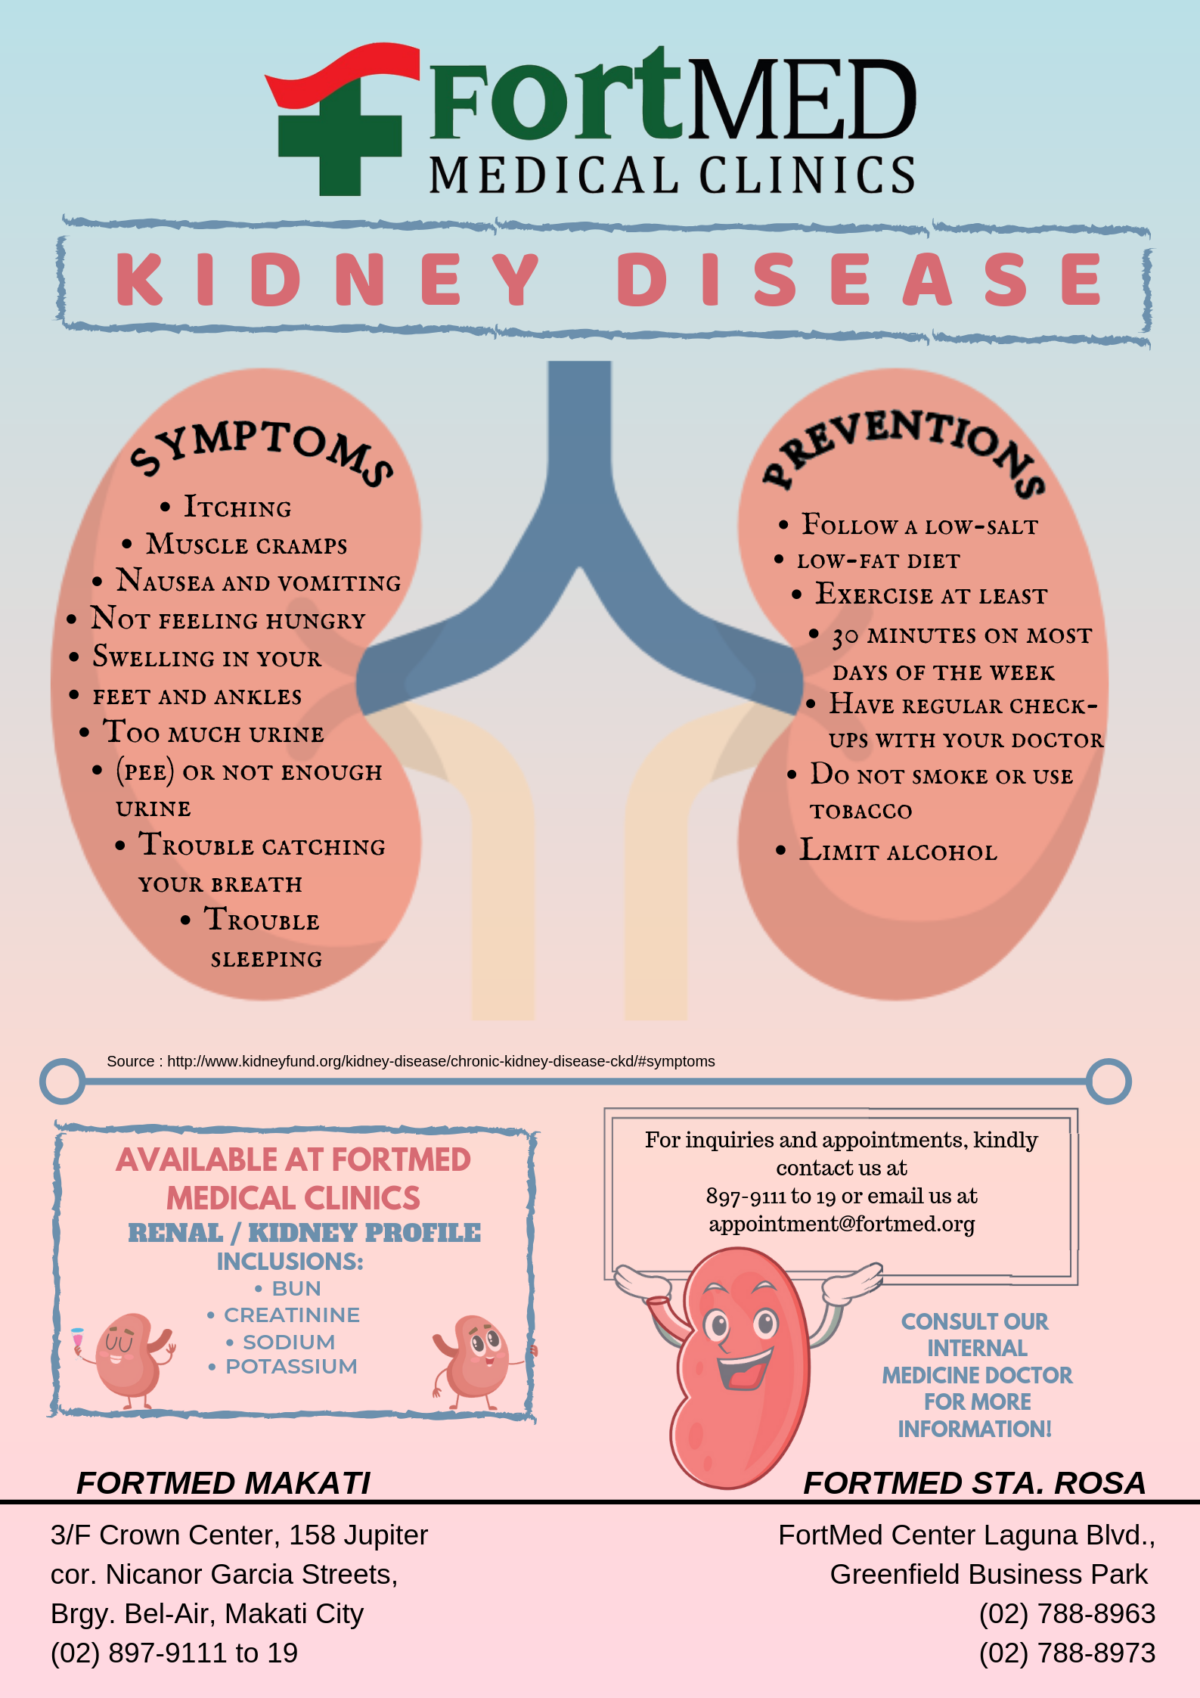 Kidney Disease Fortmed Clinics